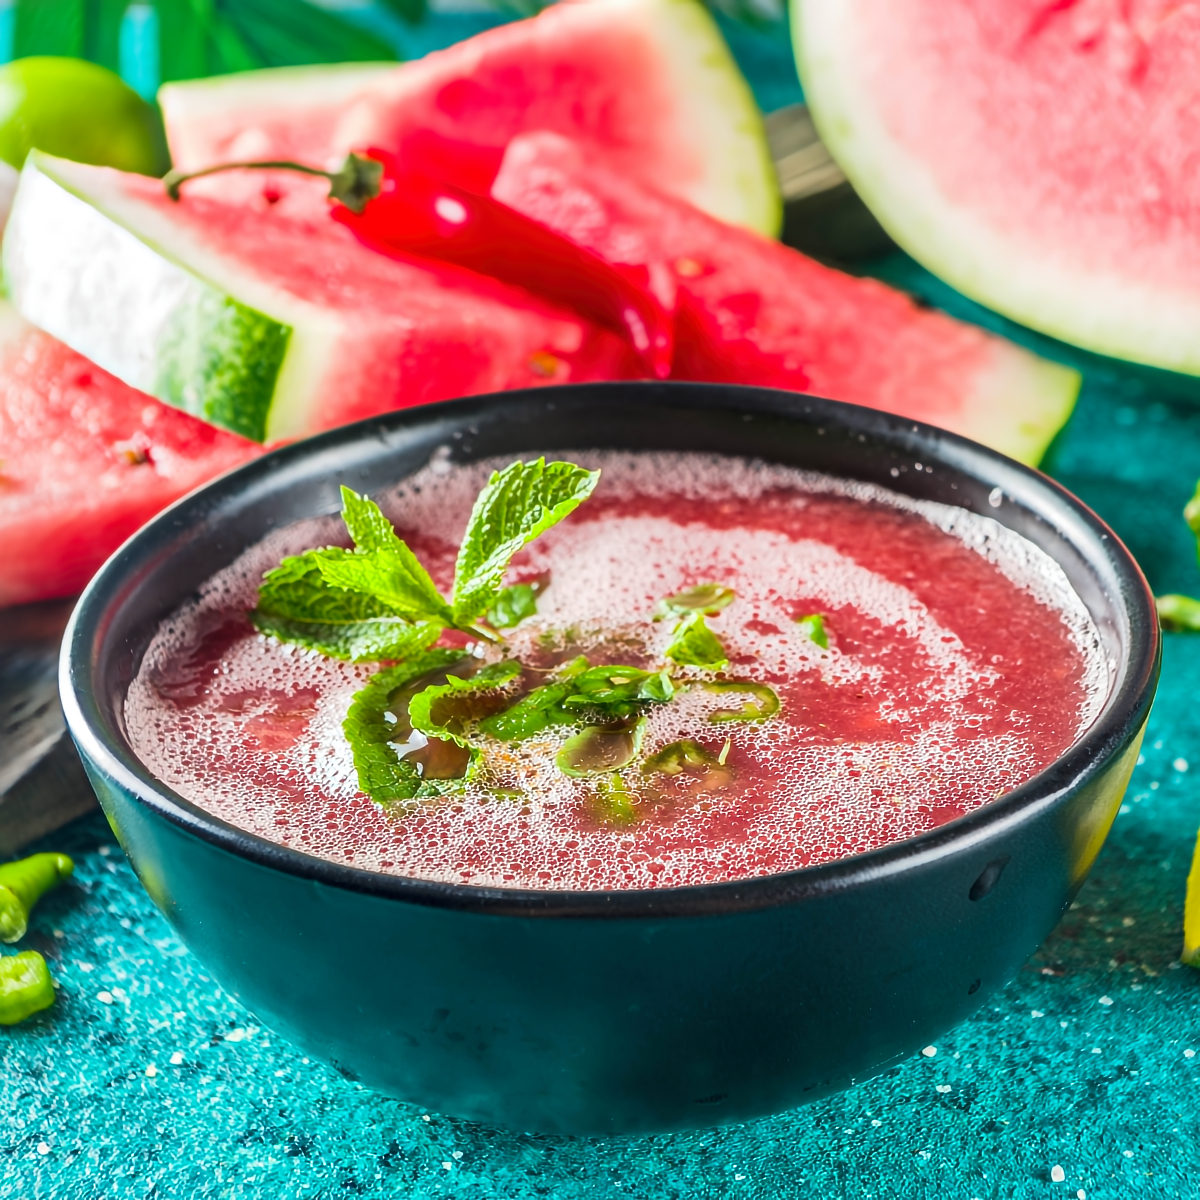 21. Cold Watermelon Soup in Gazpacho Style